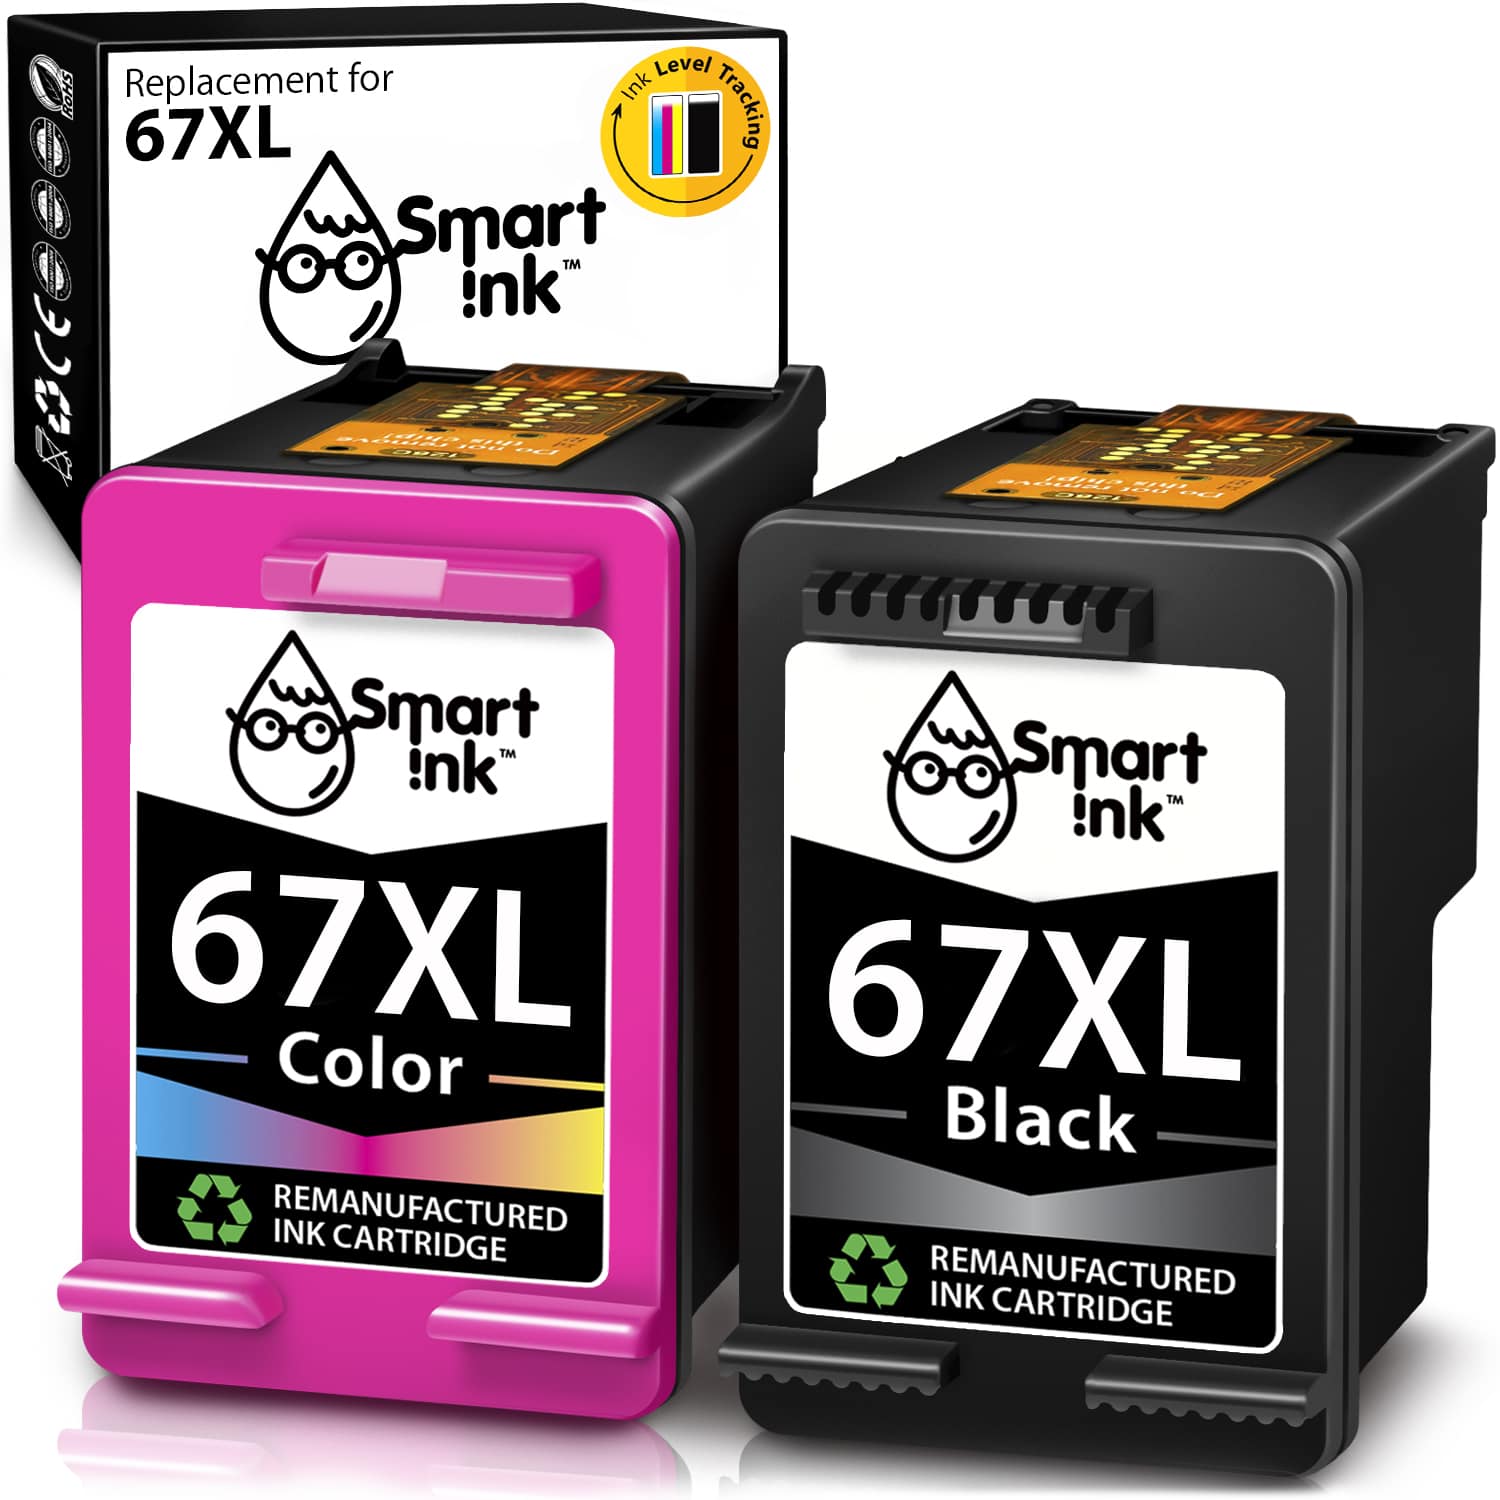 Hp 67 Xl Ink Cartridges Replacement Buy Printer Cartridges In Usa 2913